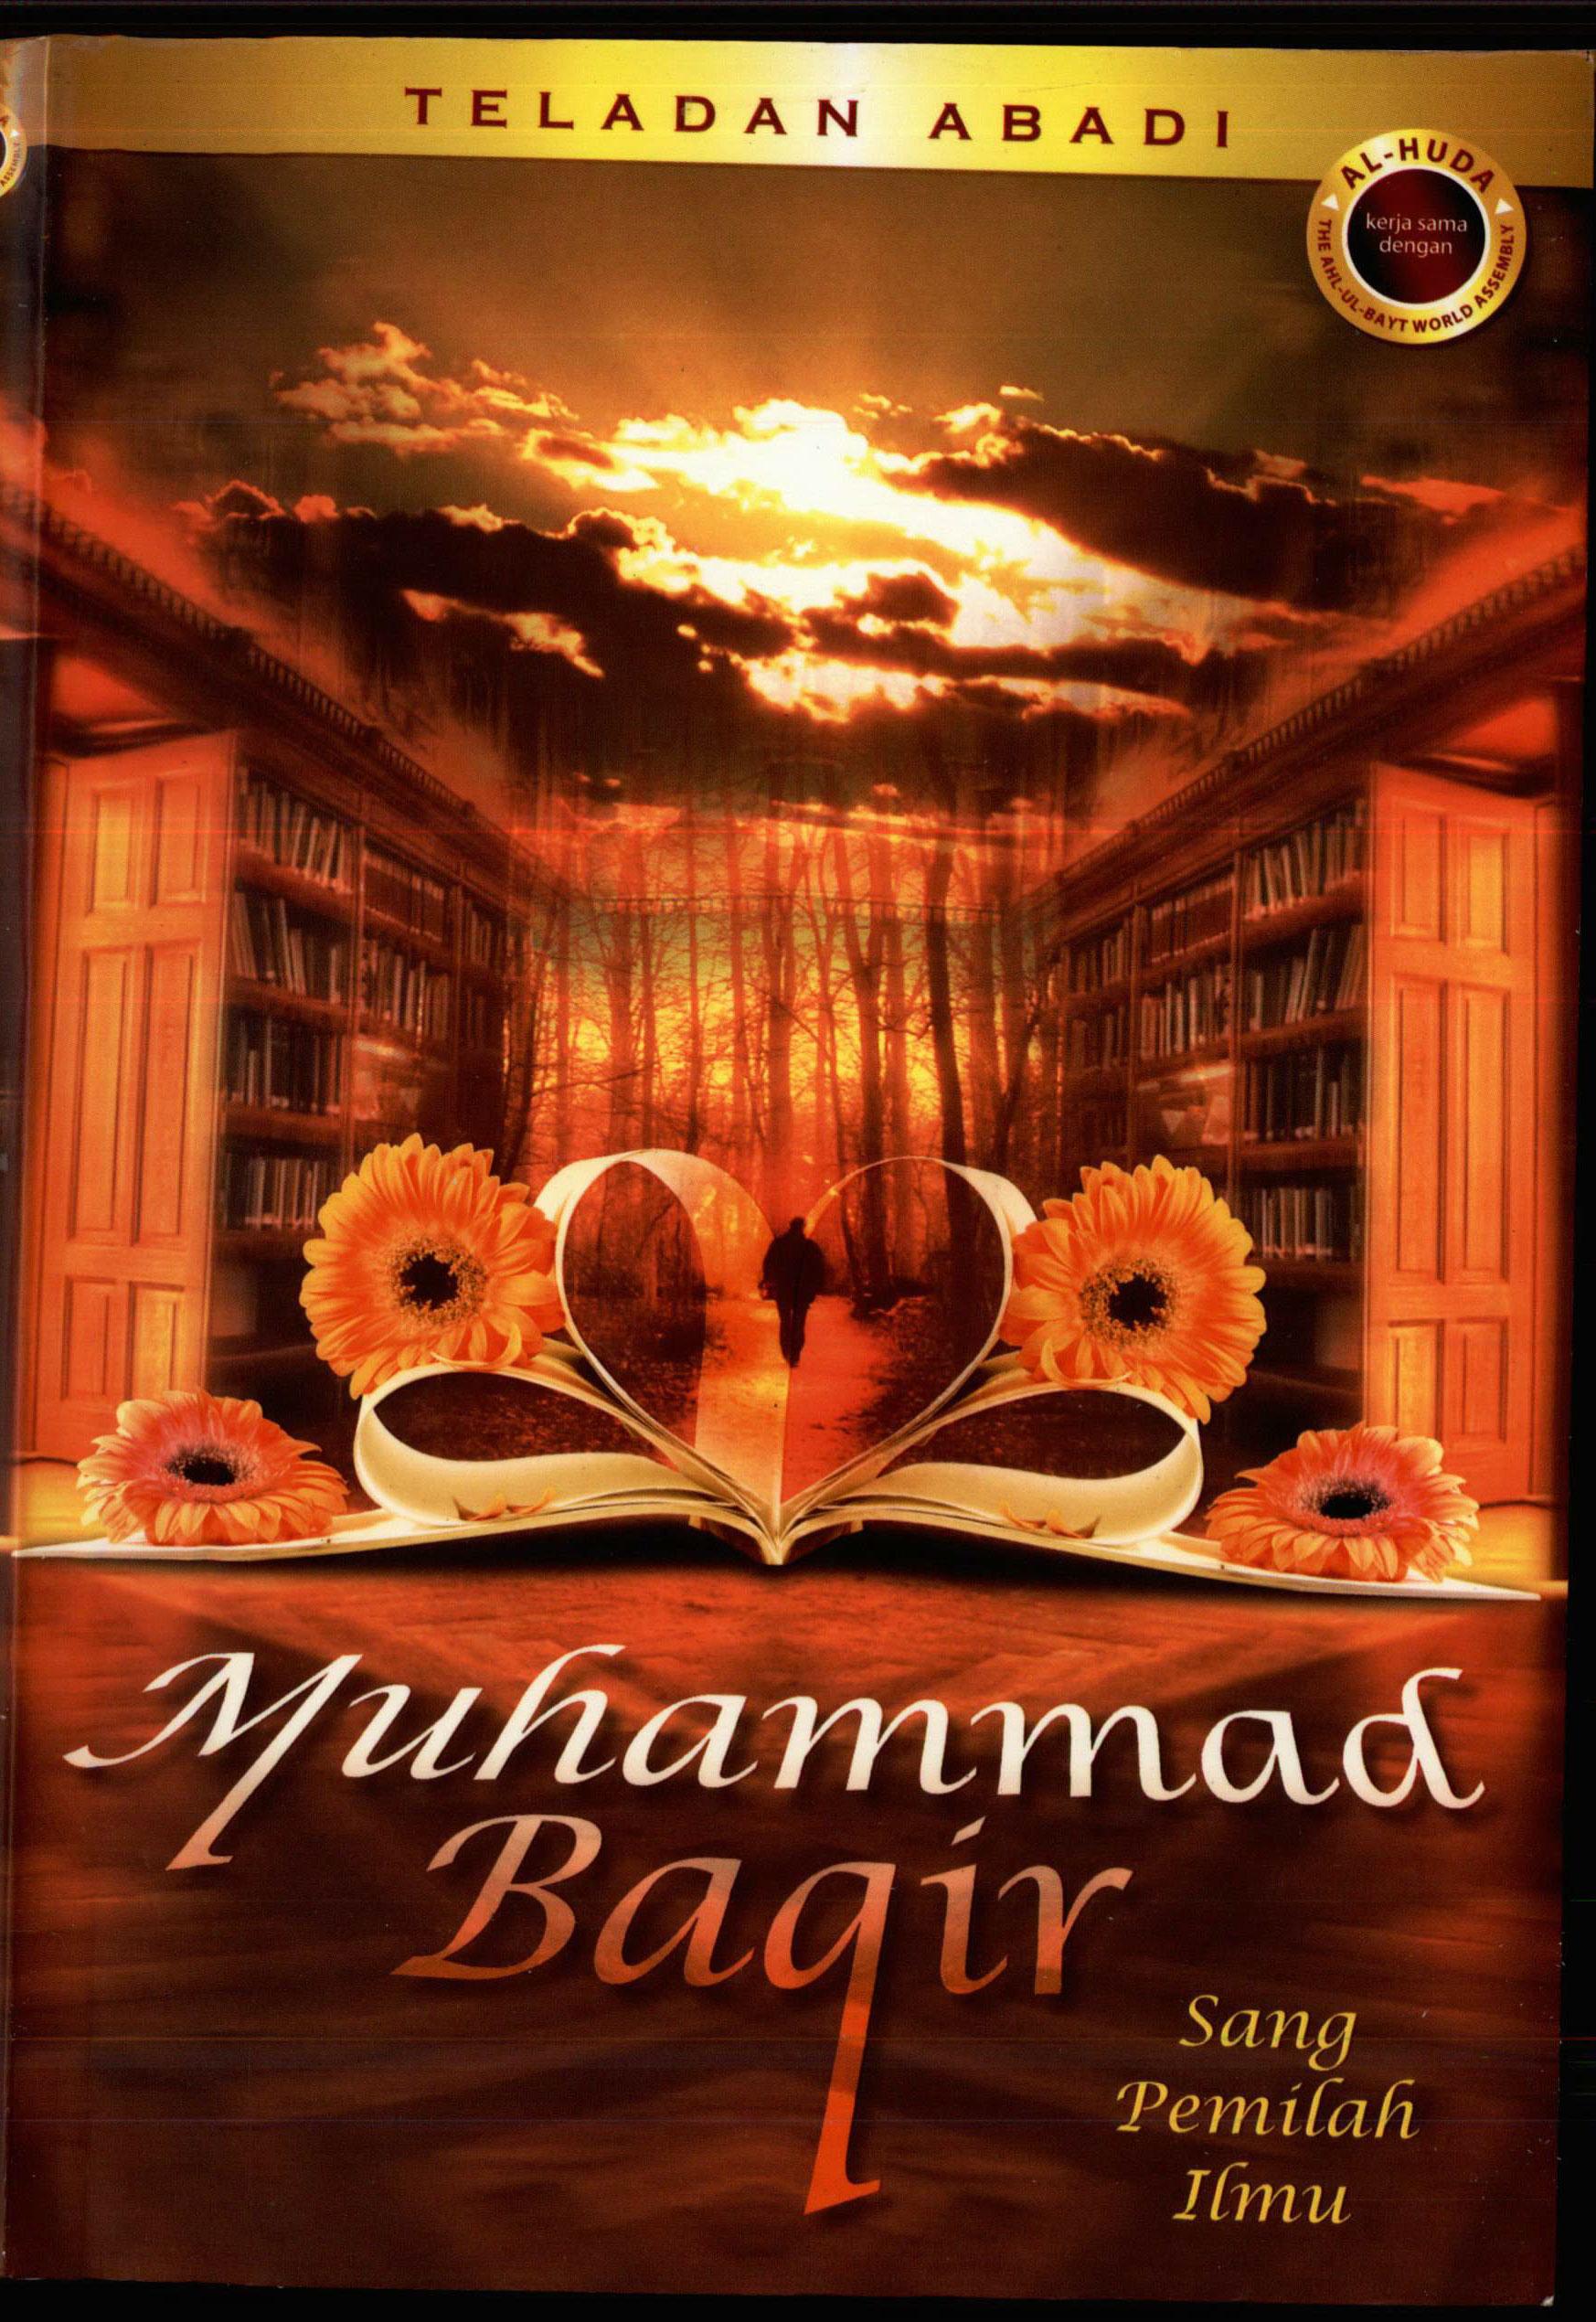 Teladan Abadi: Muhammad Baqir, Sang Pemilah Ilmu